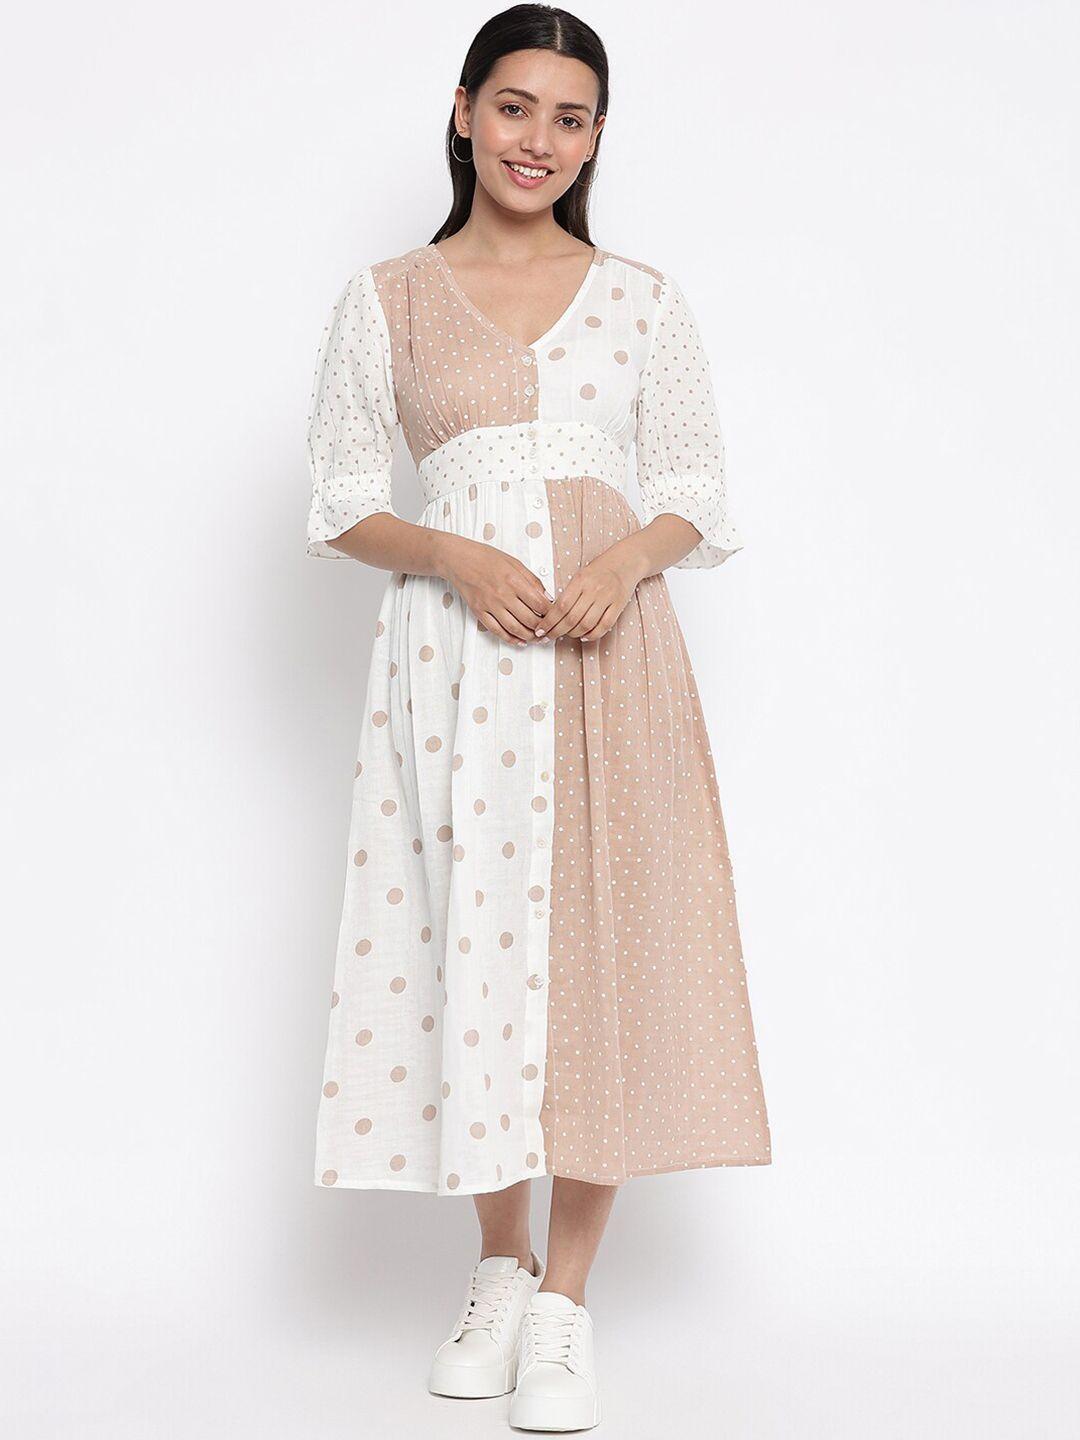 fabindia women white & beige cotton polka dot fit & flare dress